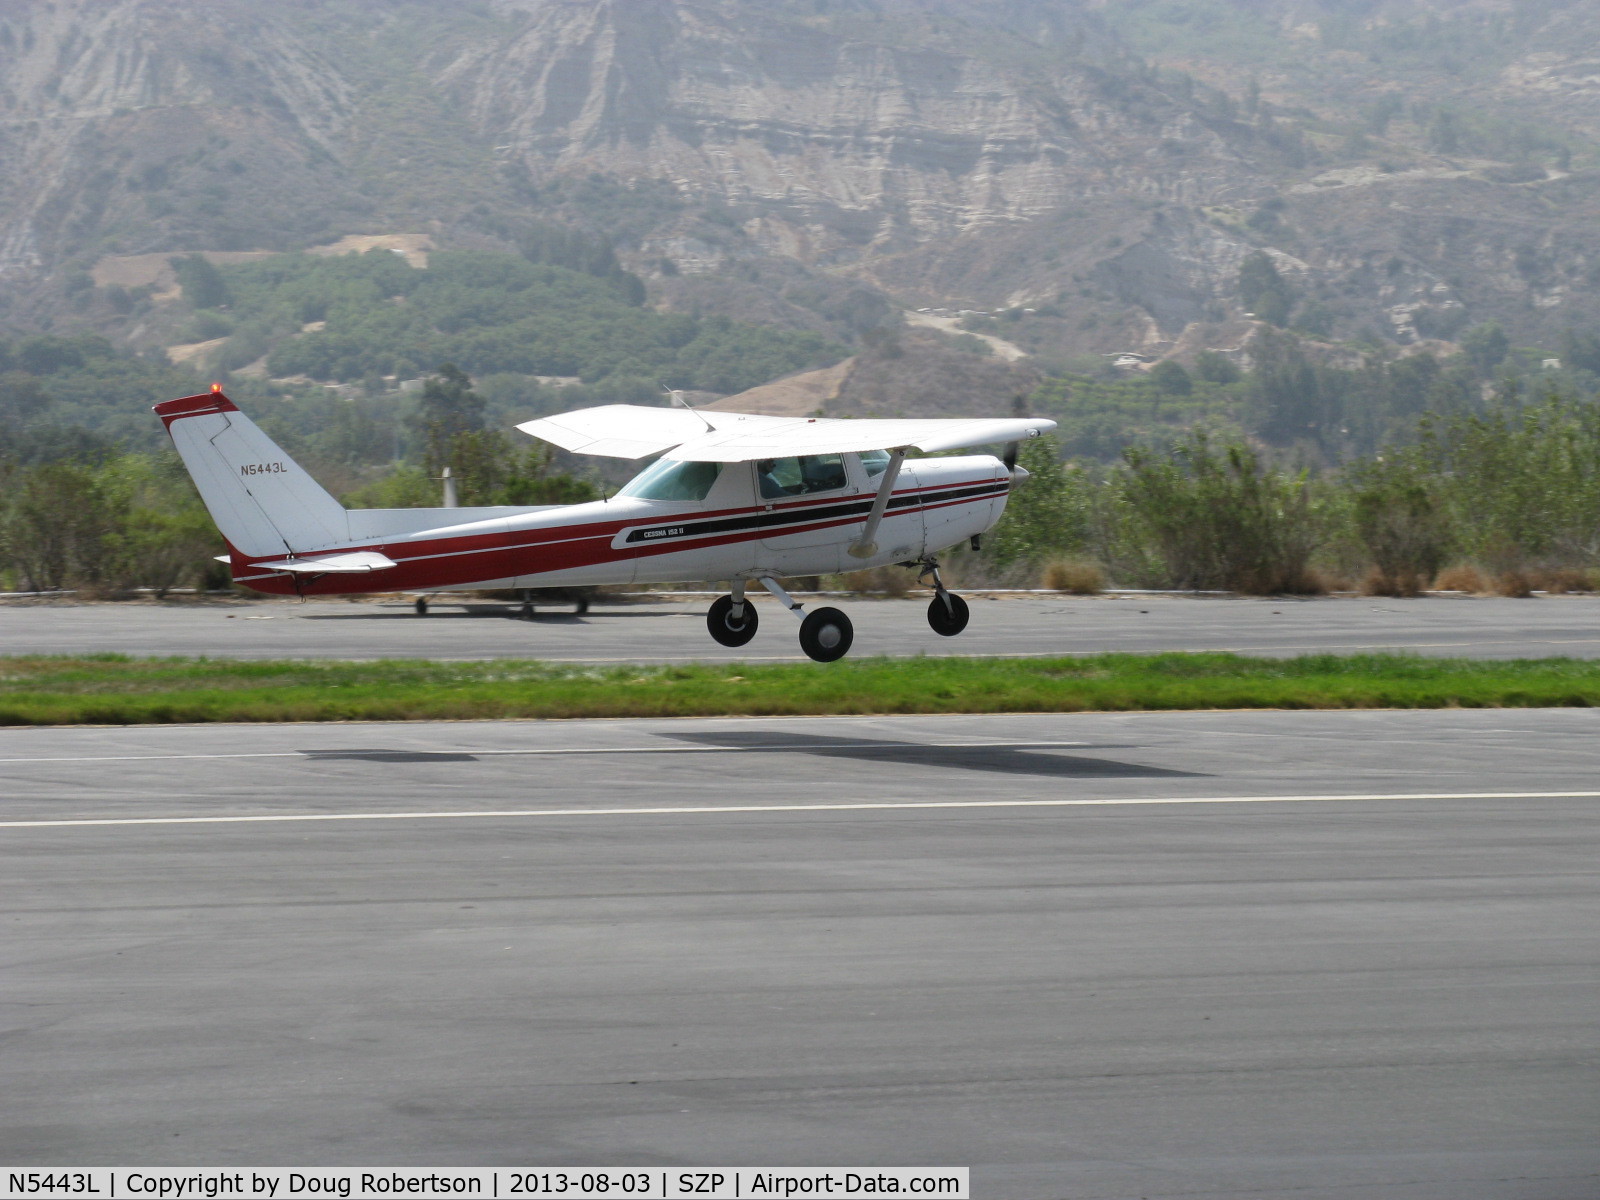 N5443L, 1980 Cessna 152 C/N 15284315, 1980 Cessna 152, Lycoming O-235 115 Hp, takeoff Rwy 22